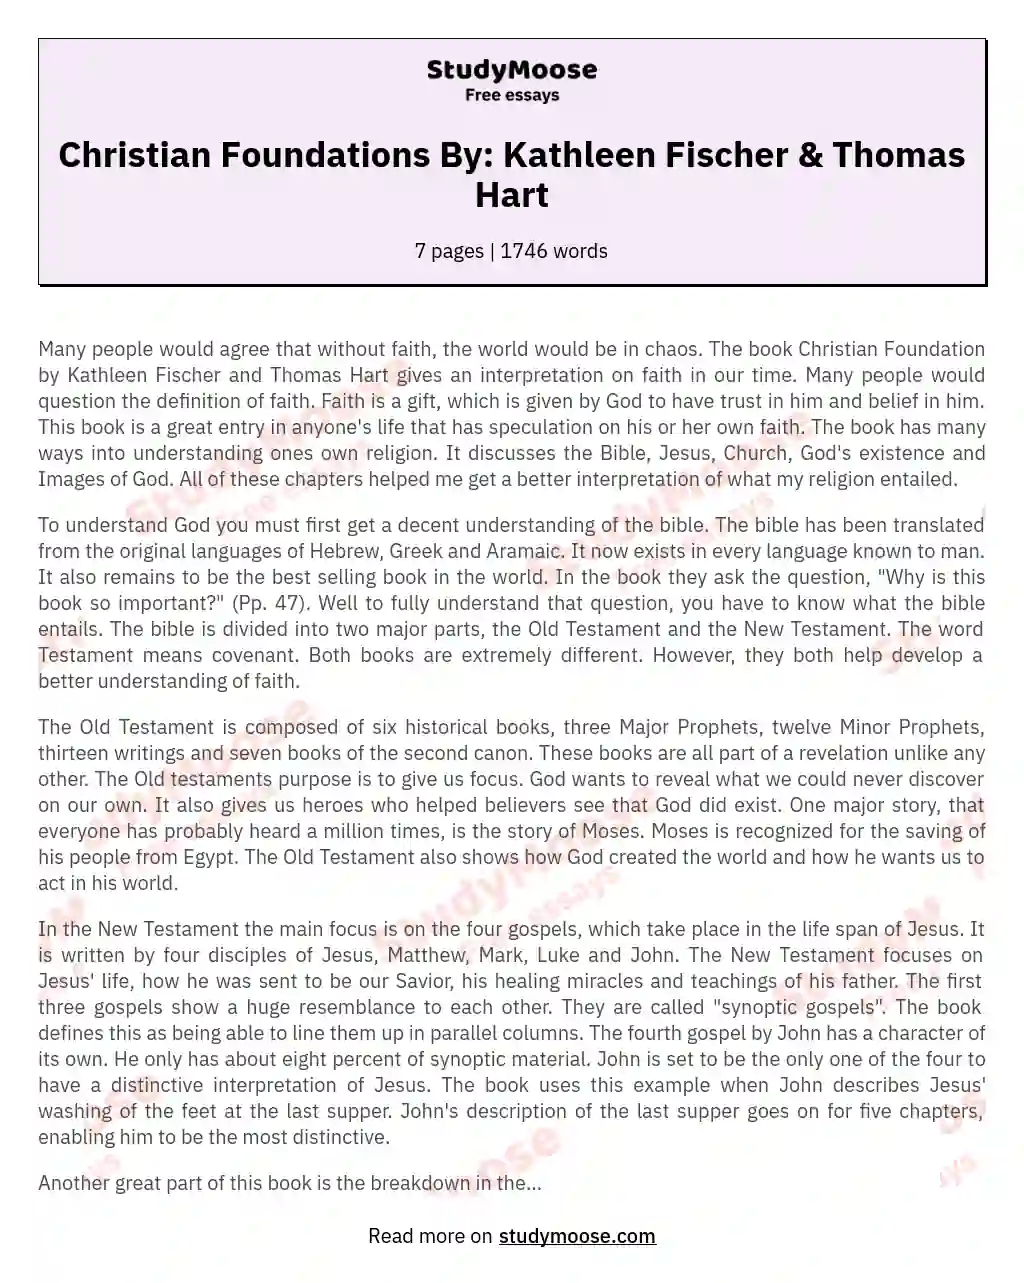 Christian Foundations By: Kathleen Fischer & Thomas Hart essay